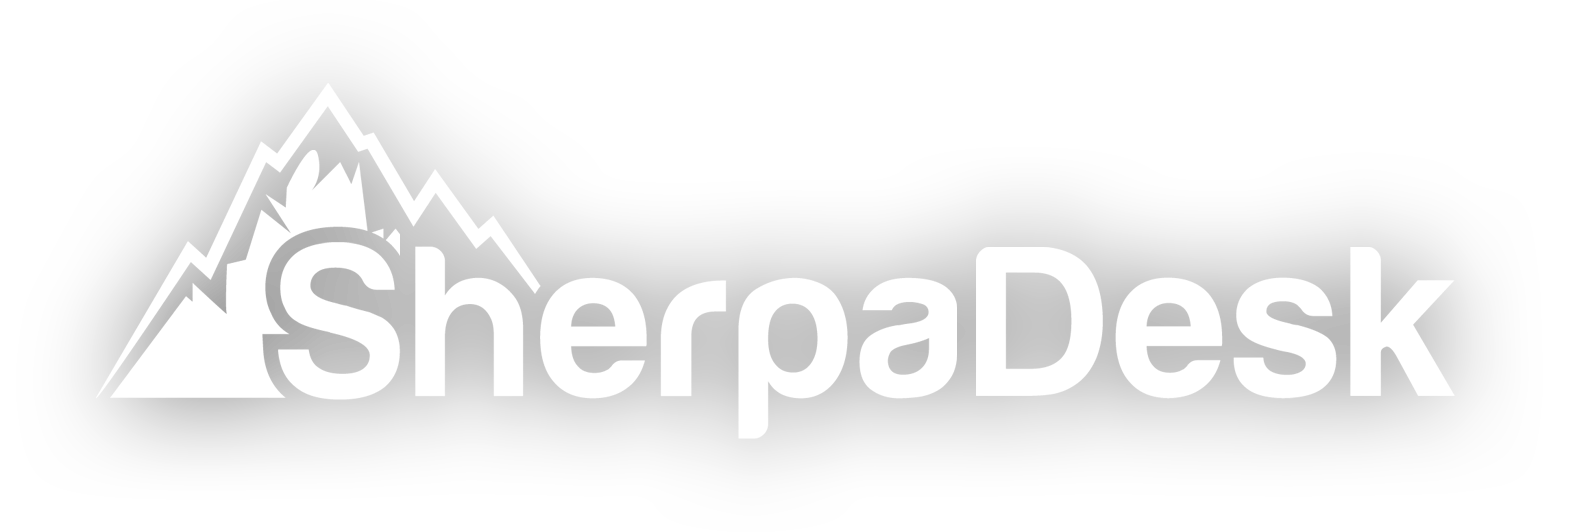 sherpadesk-logo